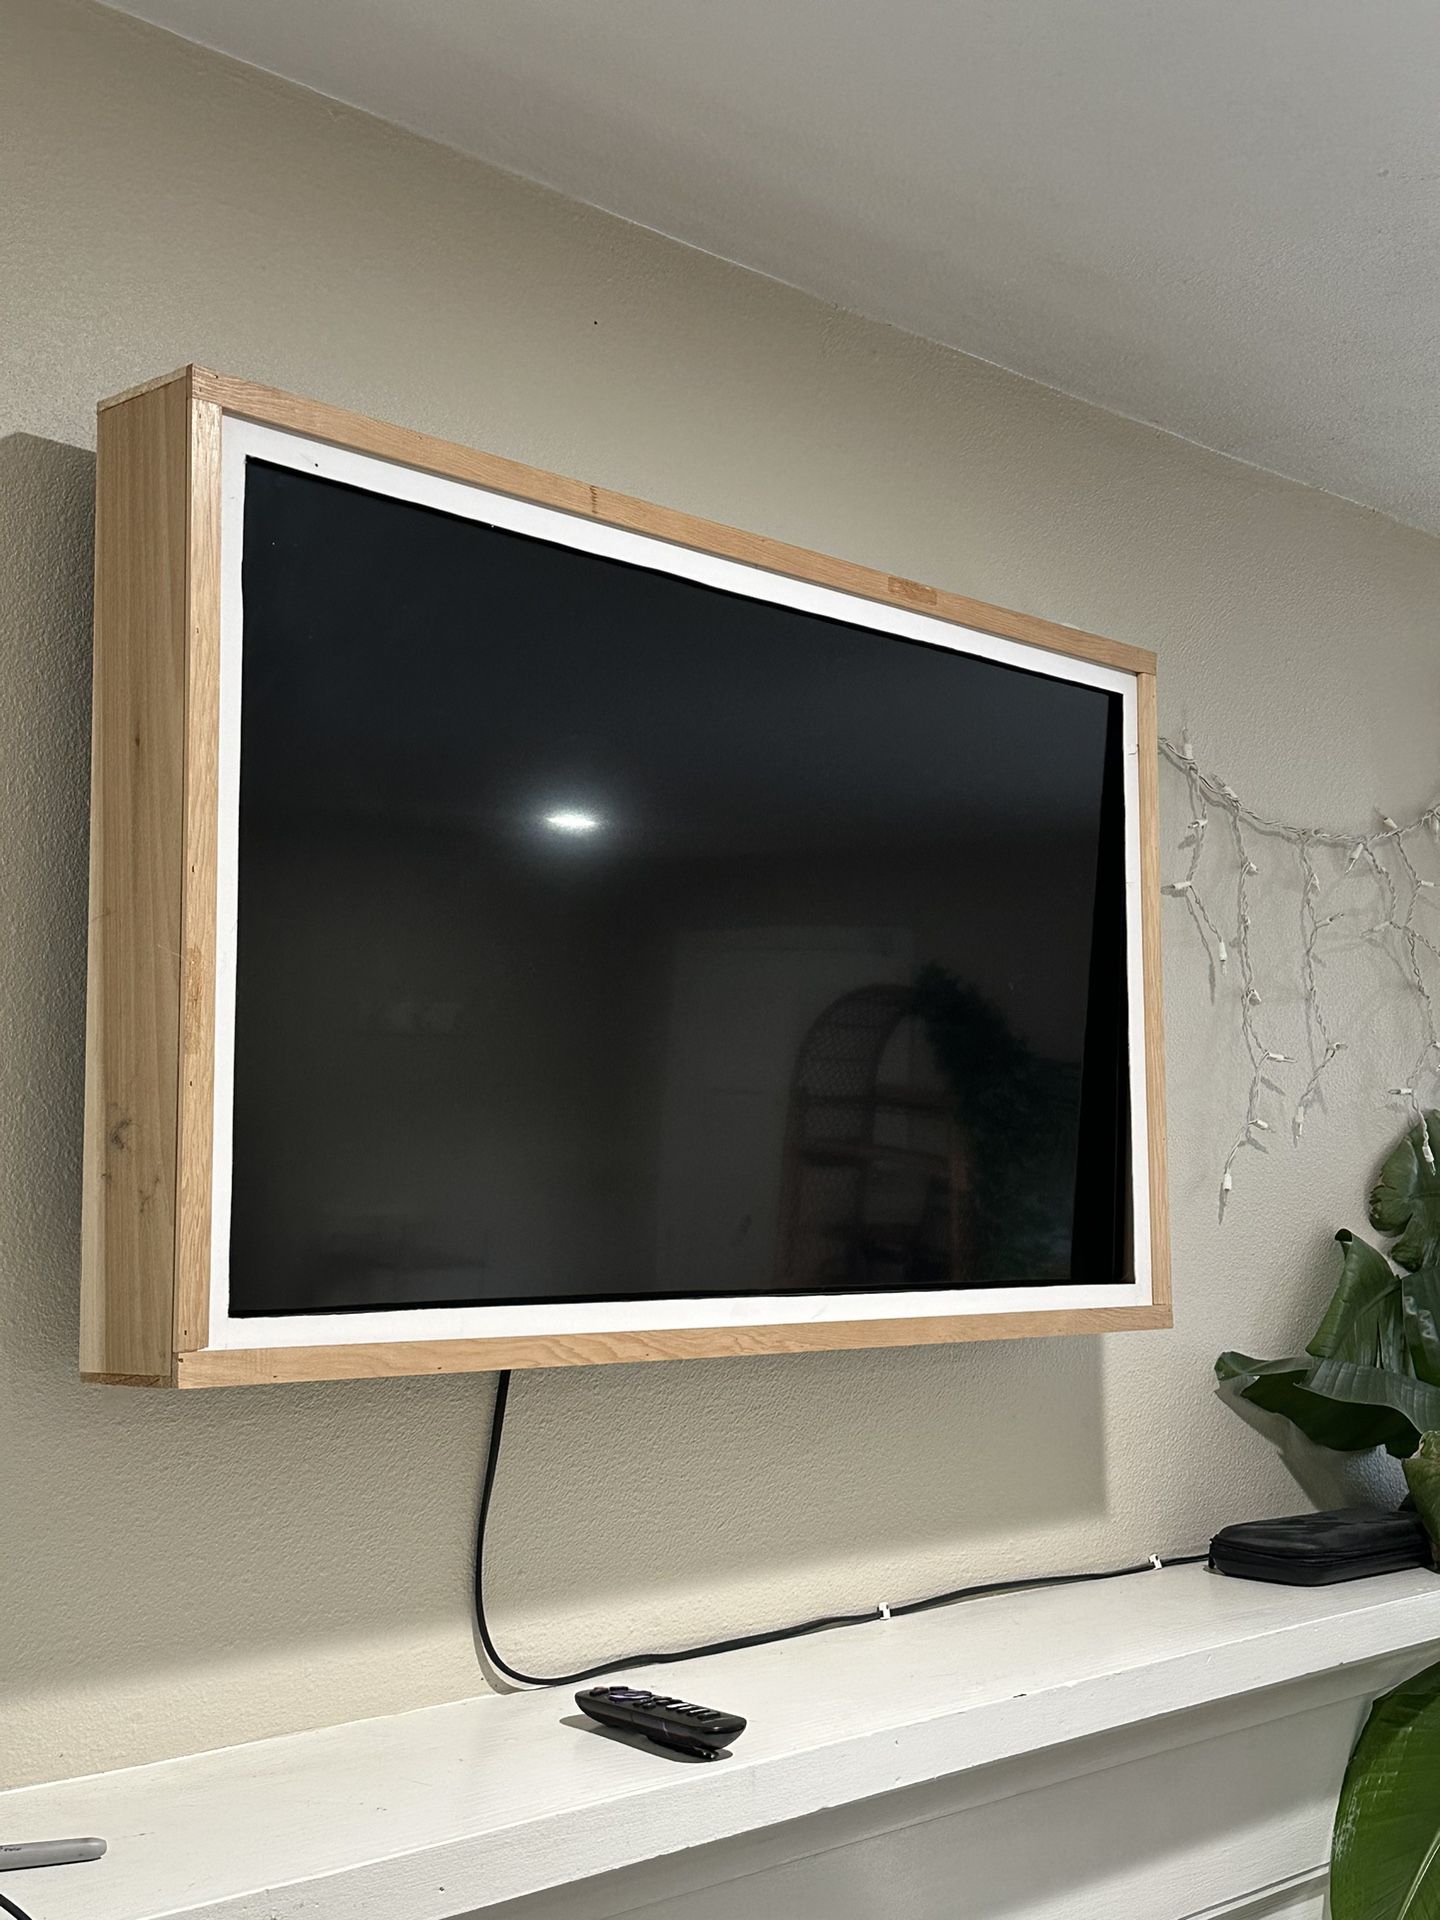 ROKU TV w/wood Frame And Wall Mount